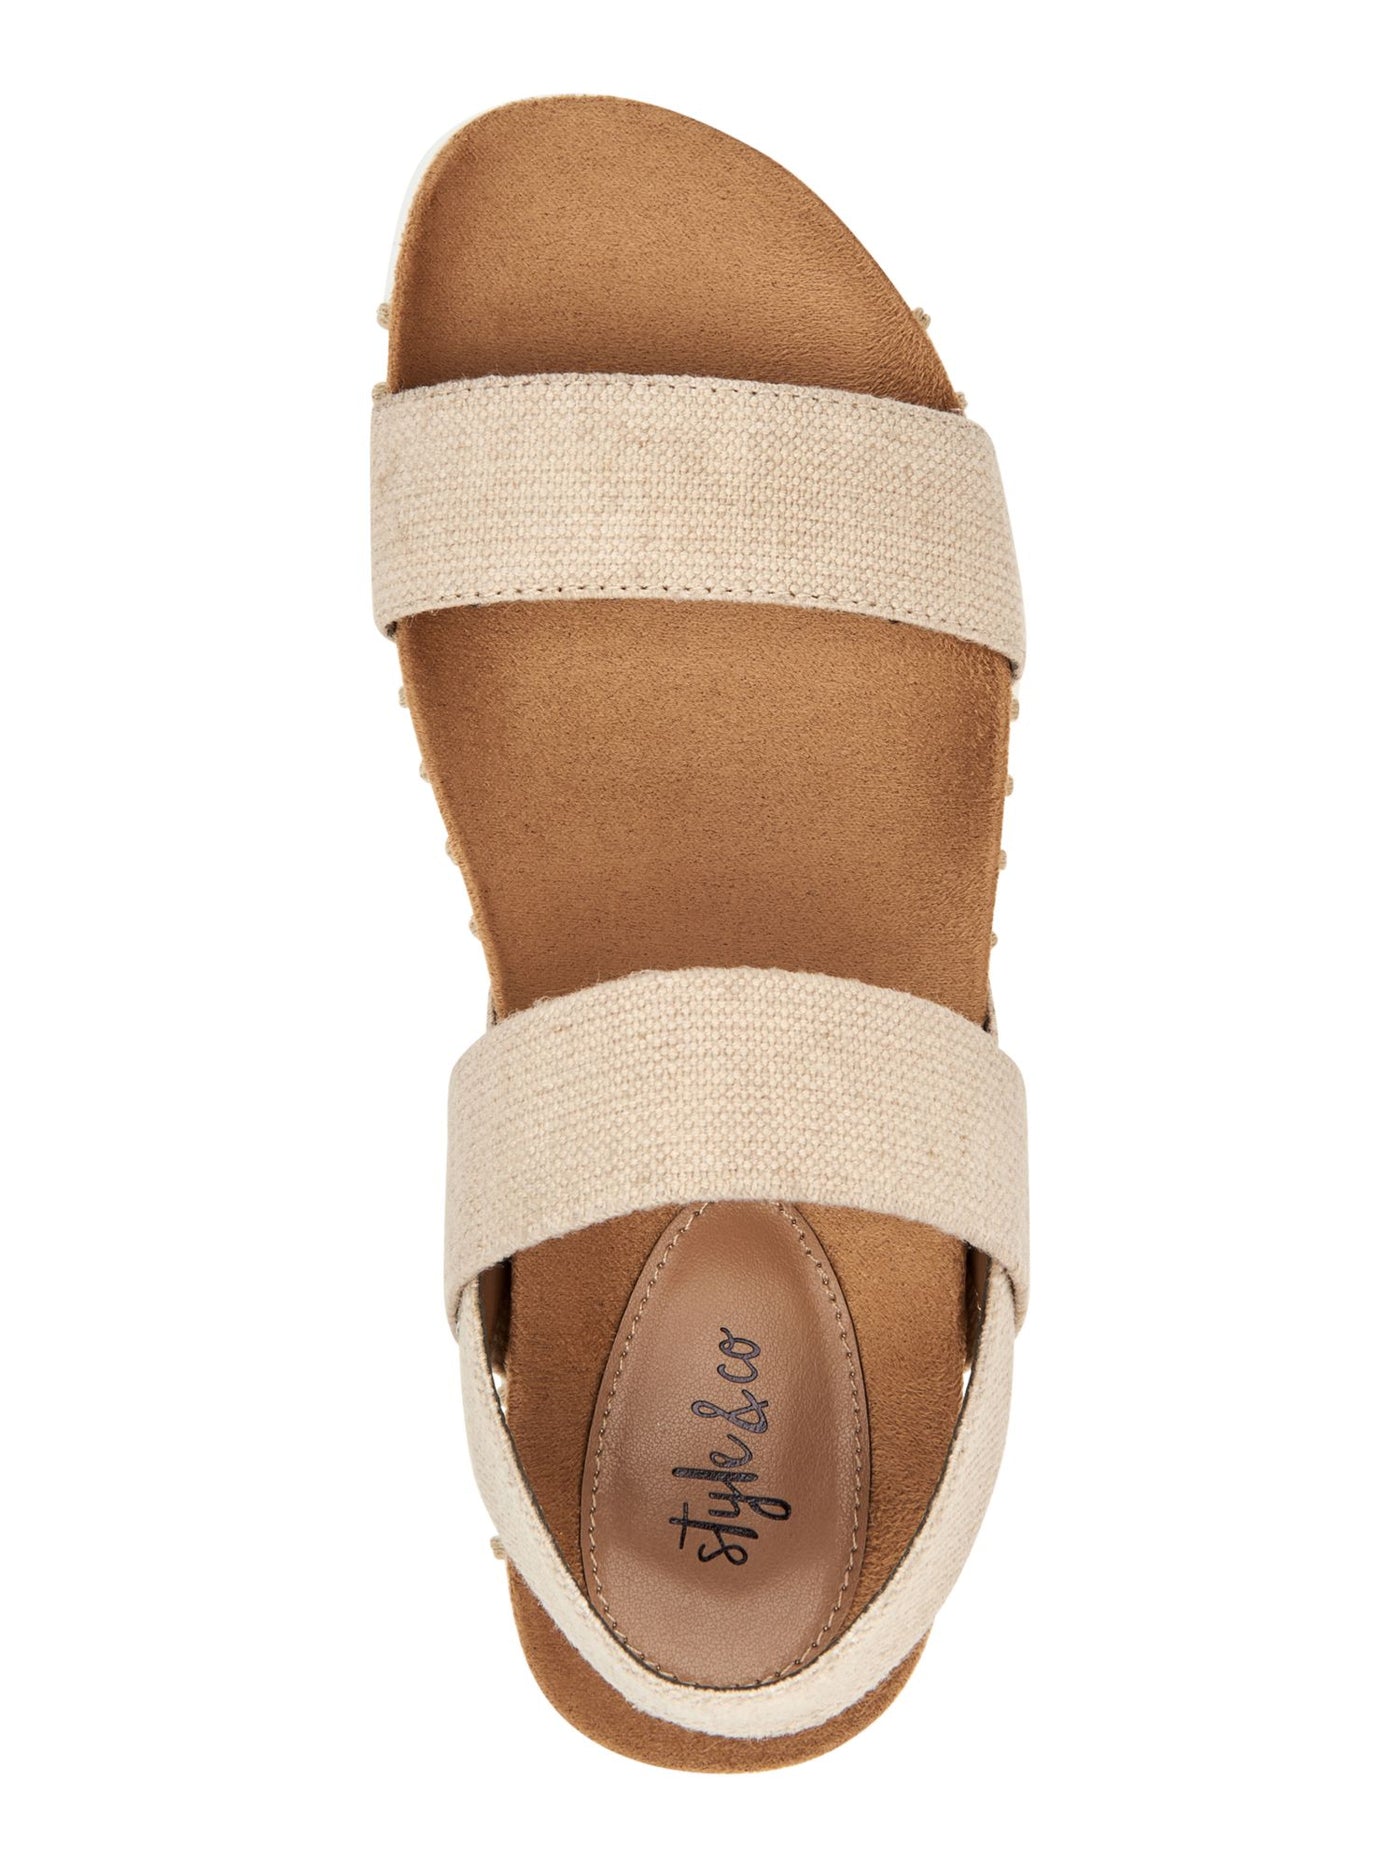 STYLE & COMPANY Womens Beige 1" Platform Stretch Comfort Milaa Round Toe Wedge Slip On Slingback Sandal 11 M